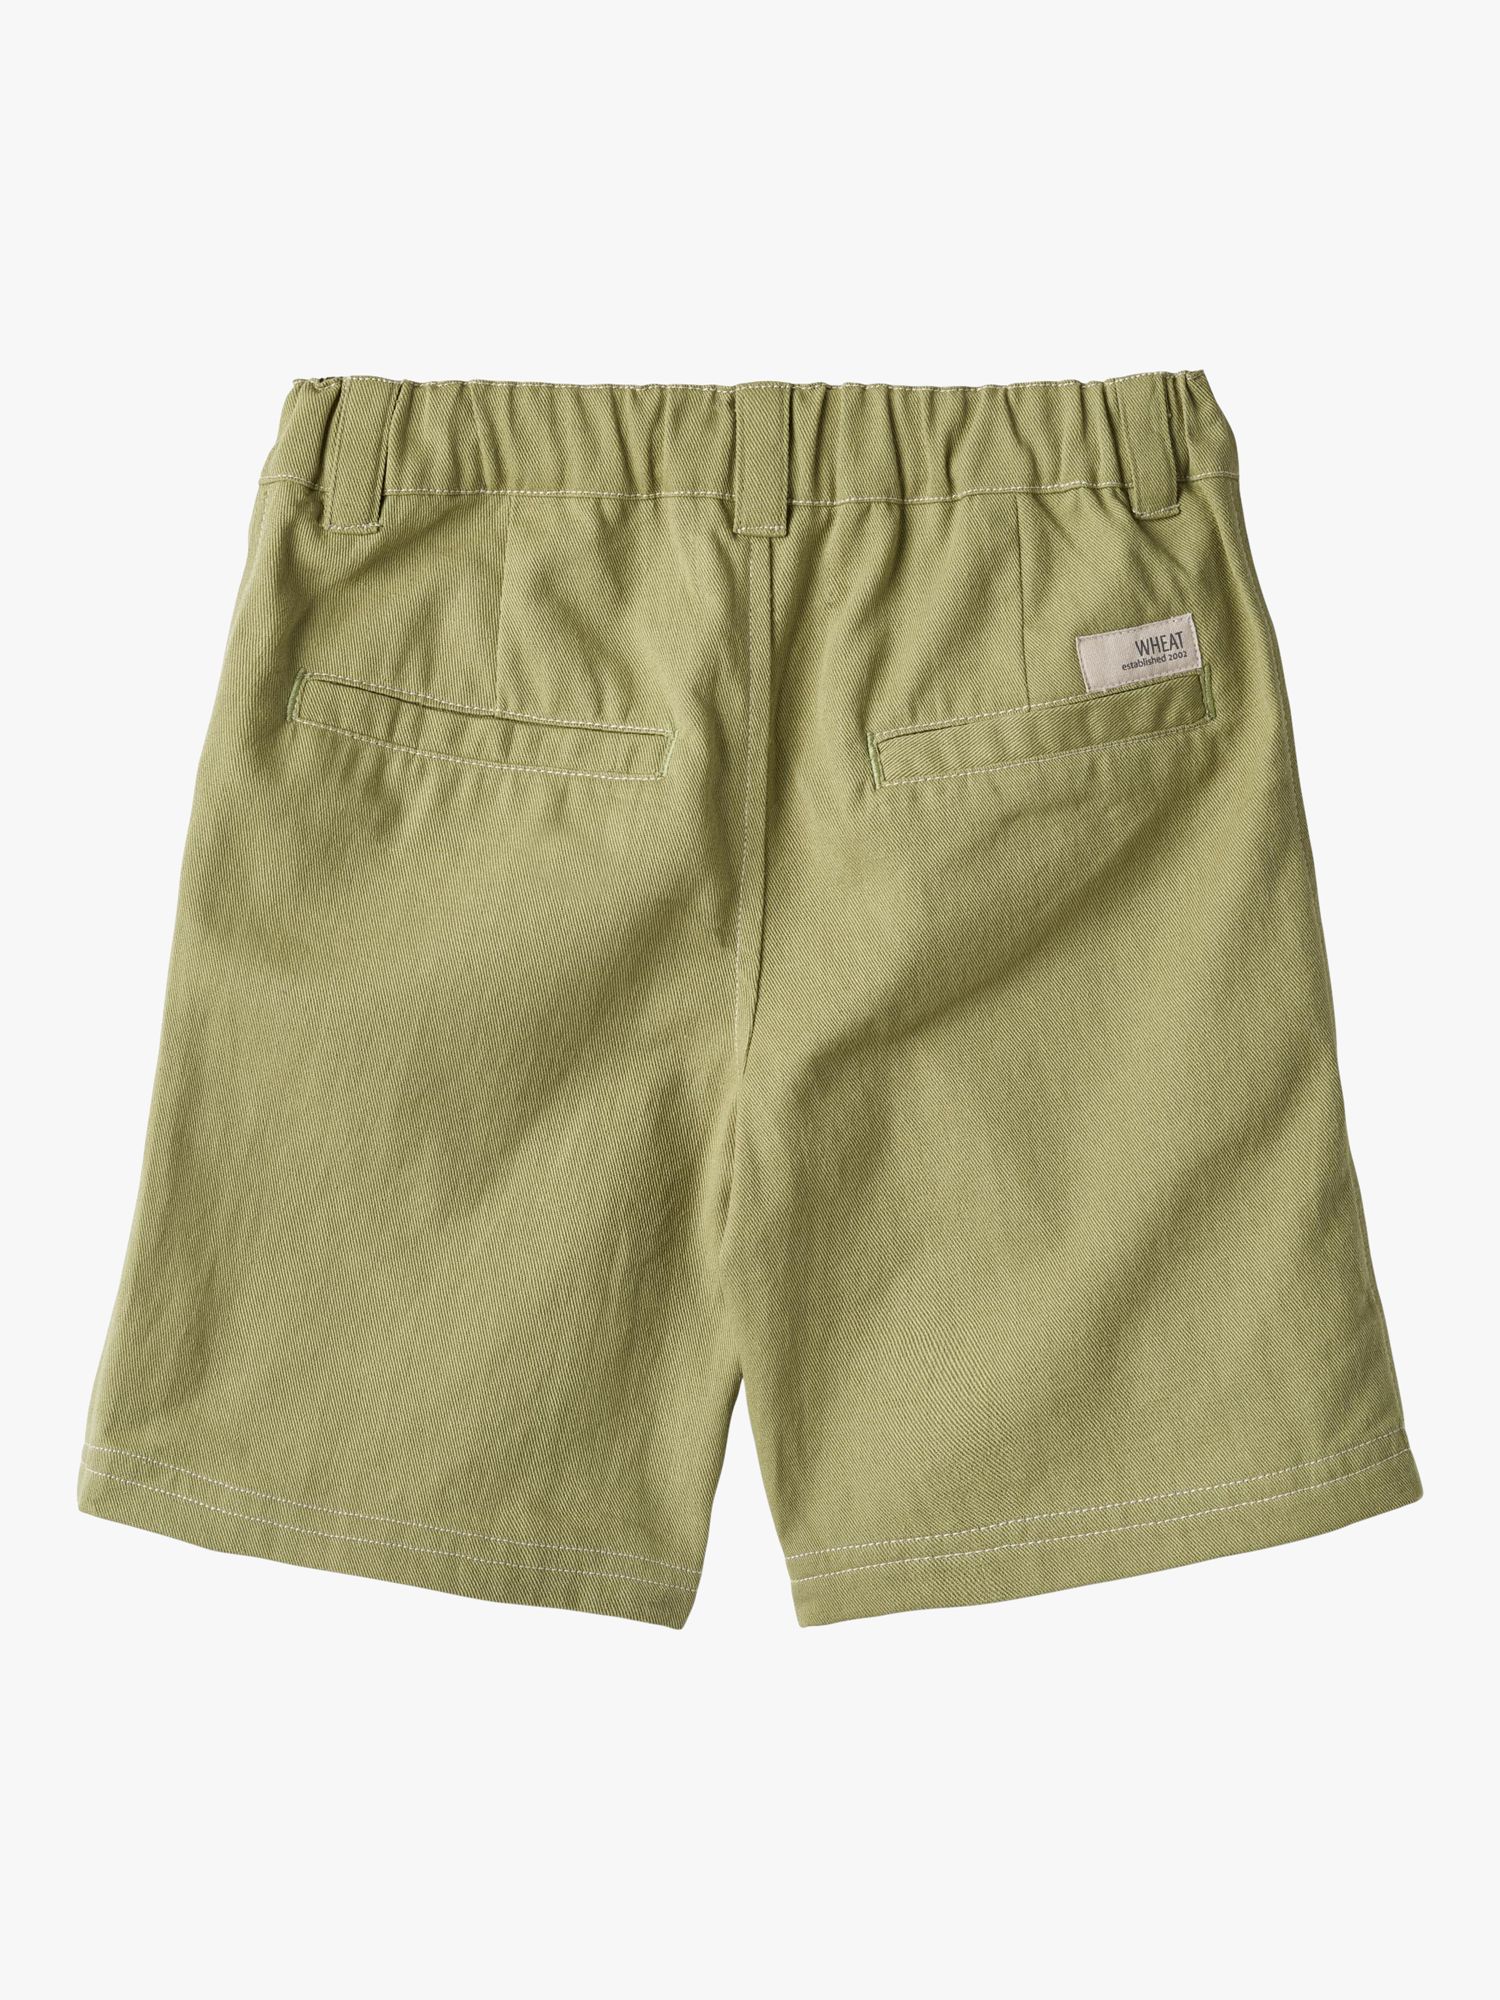 WHEAT Kids' Pelle Shorts, Sage, 3 years